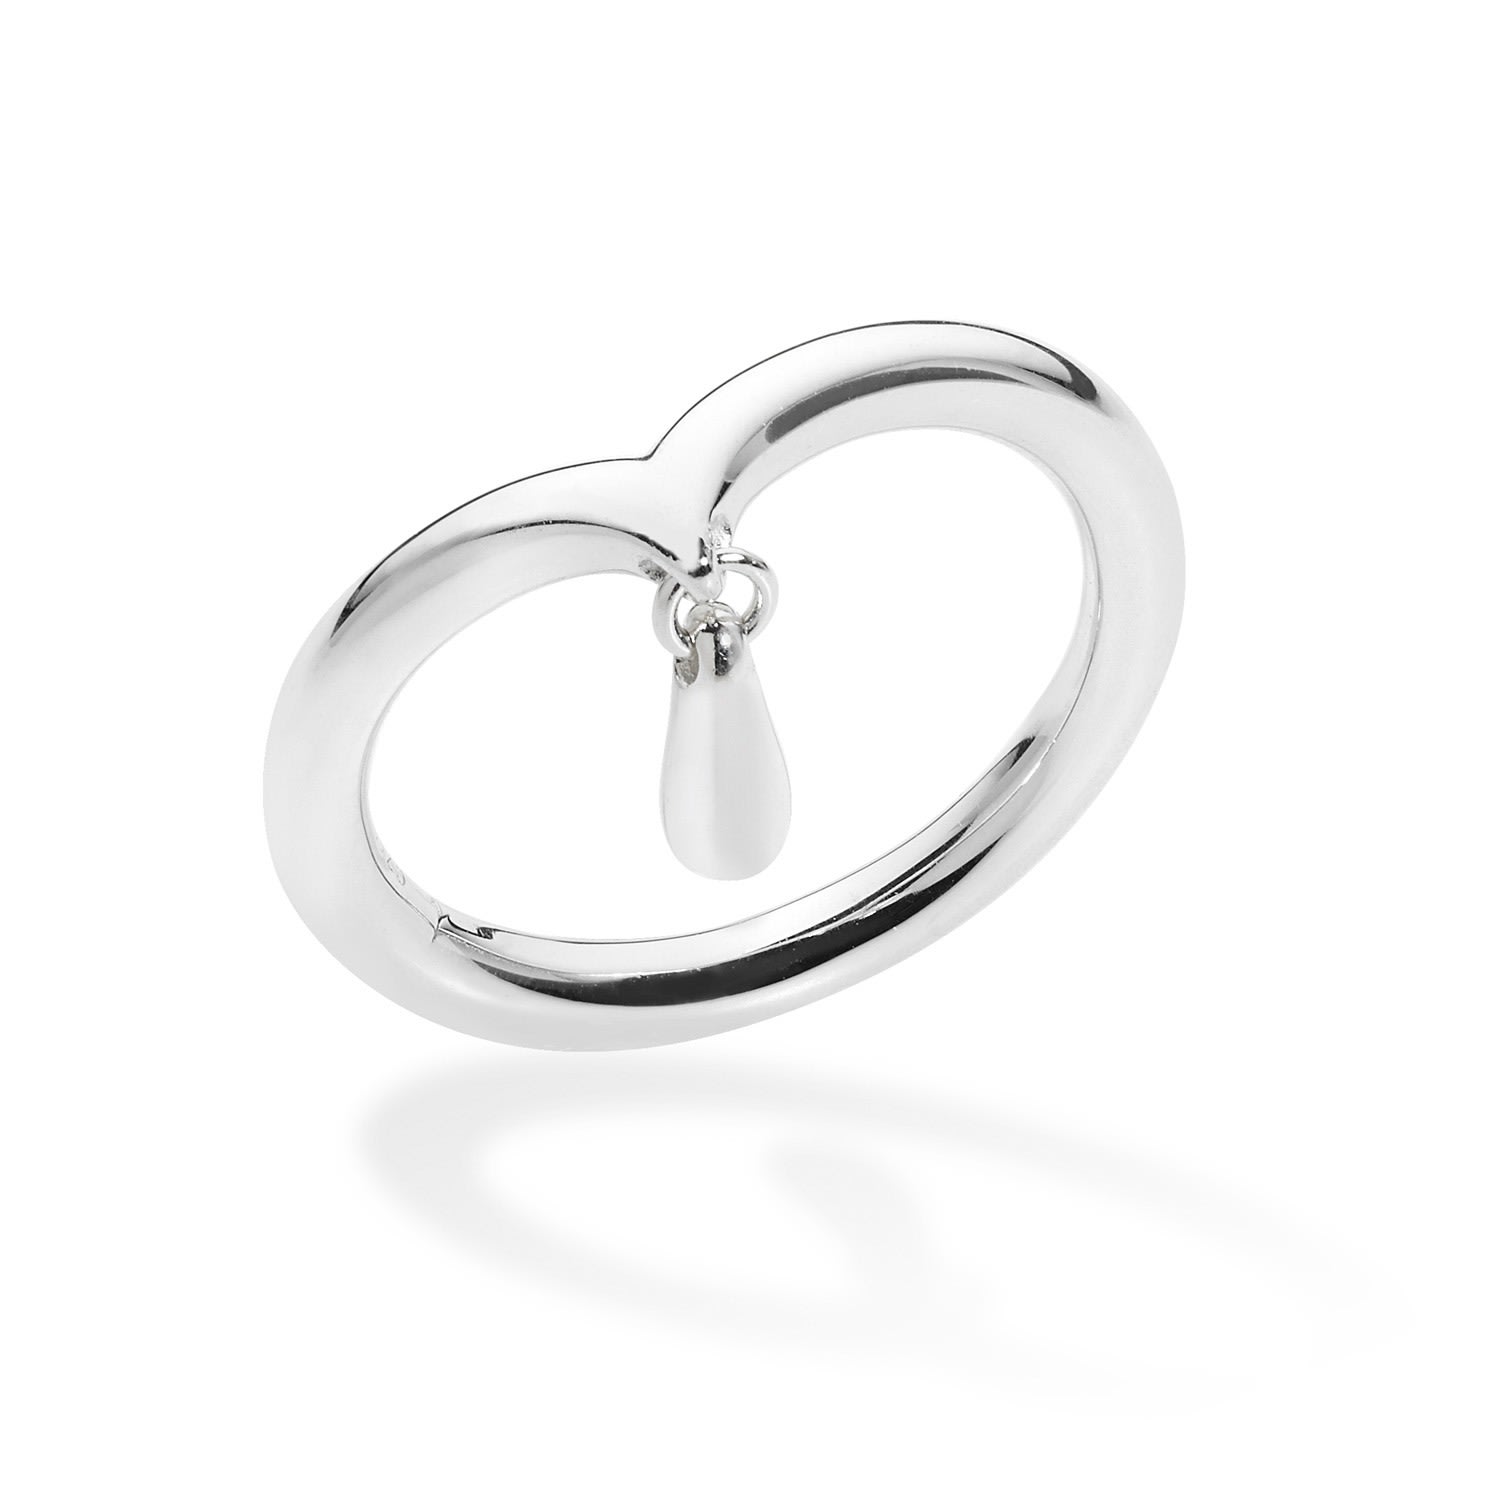 Lucy Quartermaine Women's Sterling Silver Mini Drop Ring, Award Winning Designer Jewellery By , Every